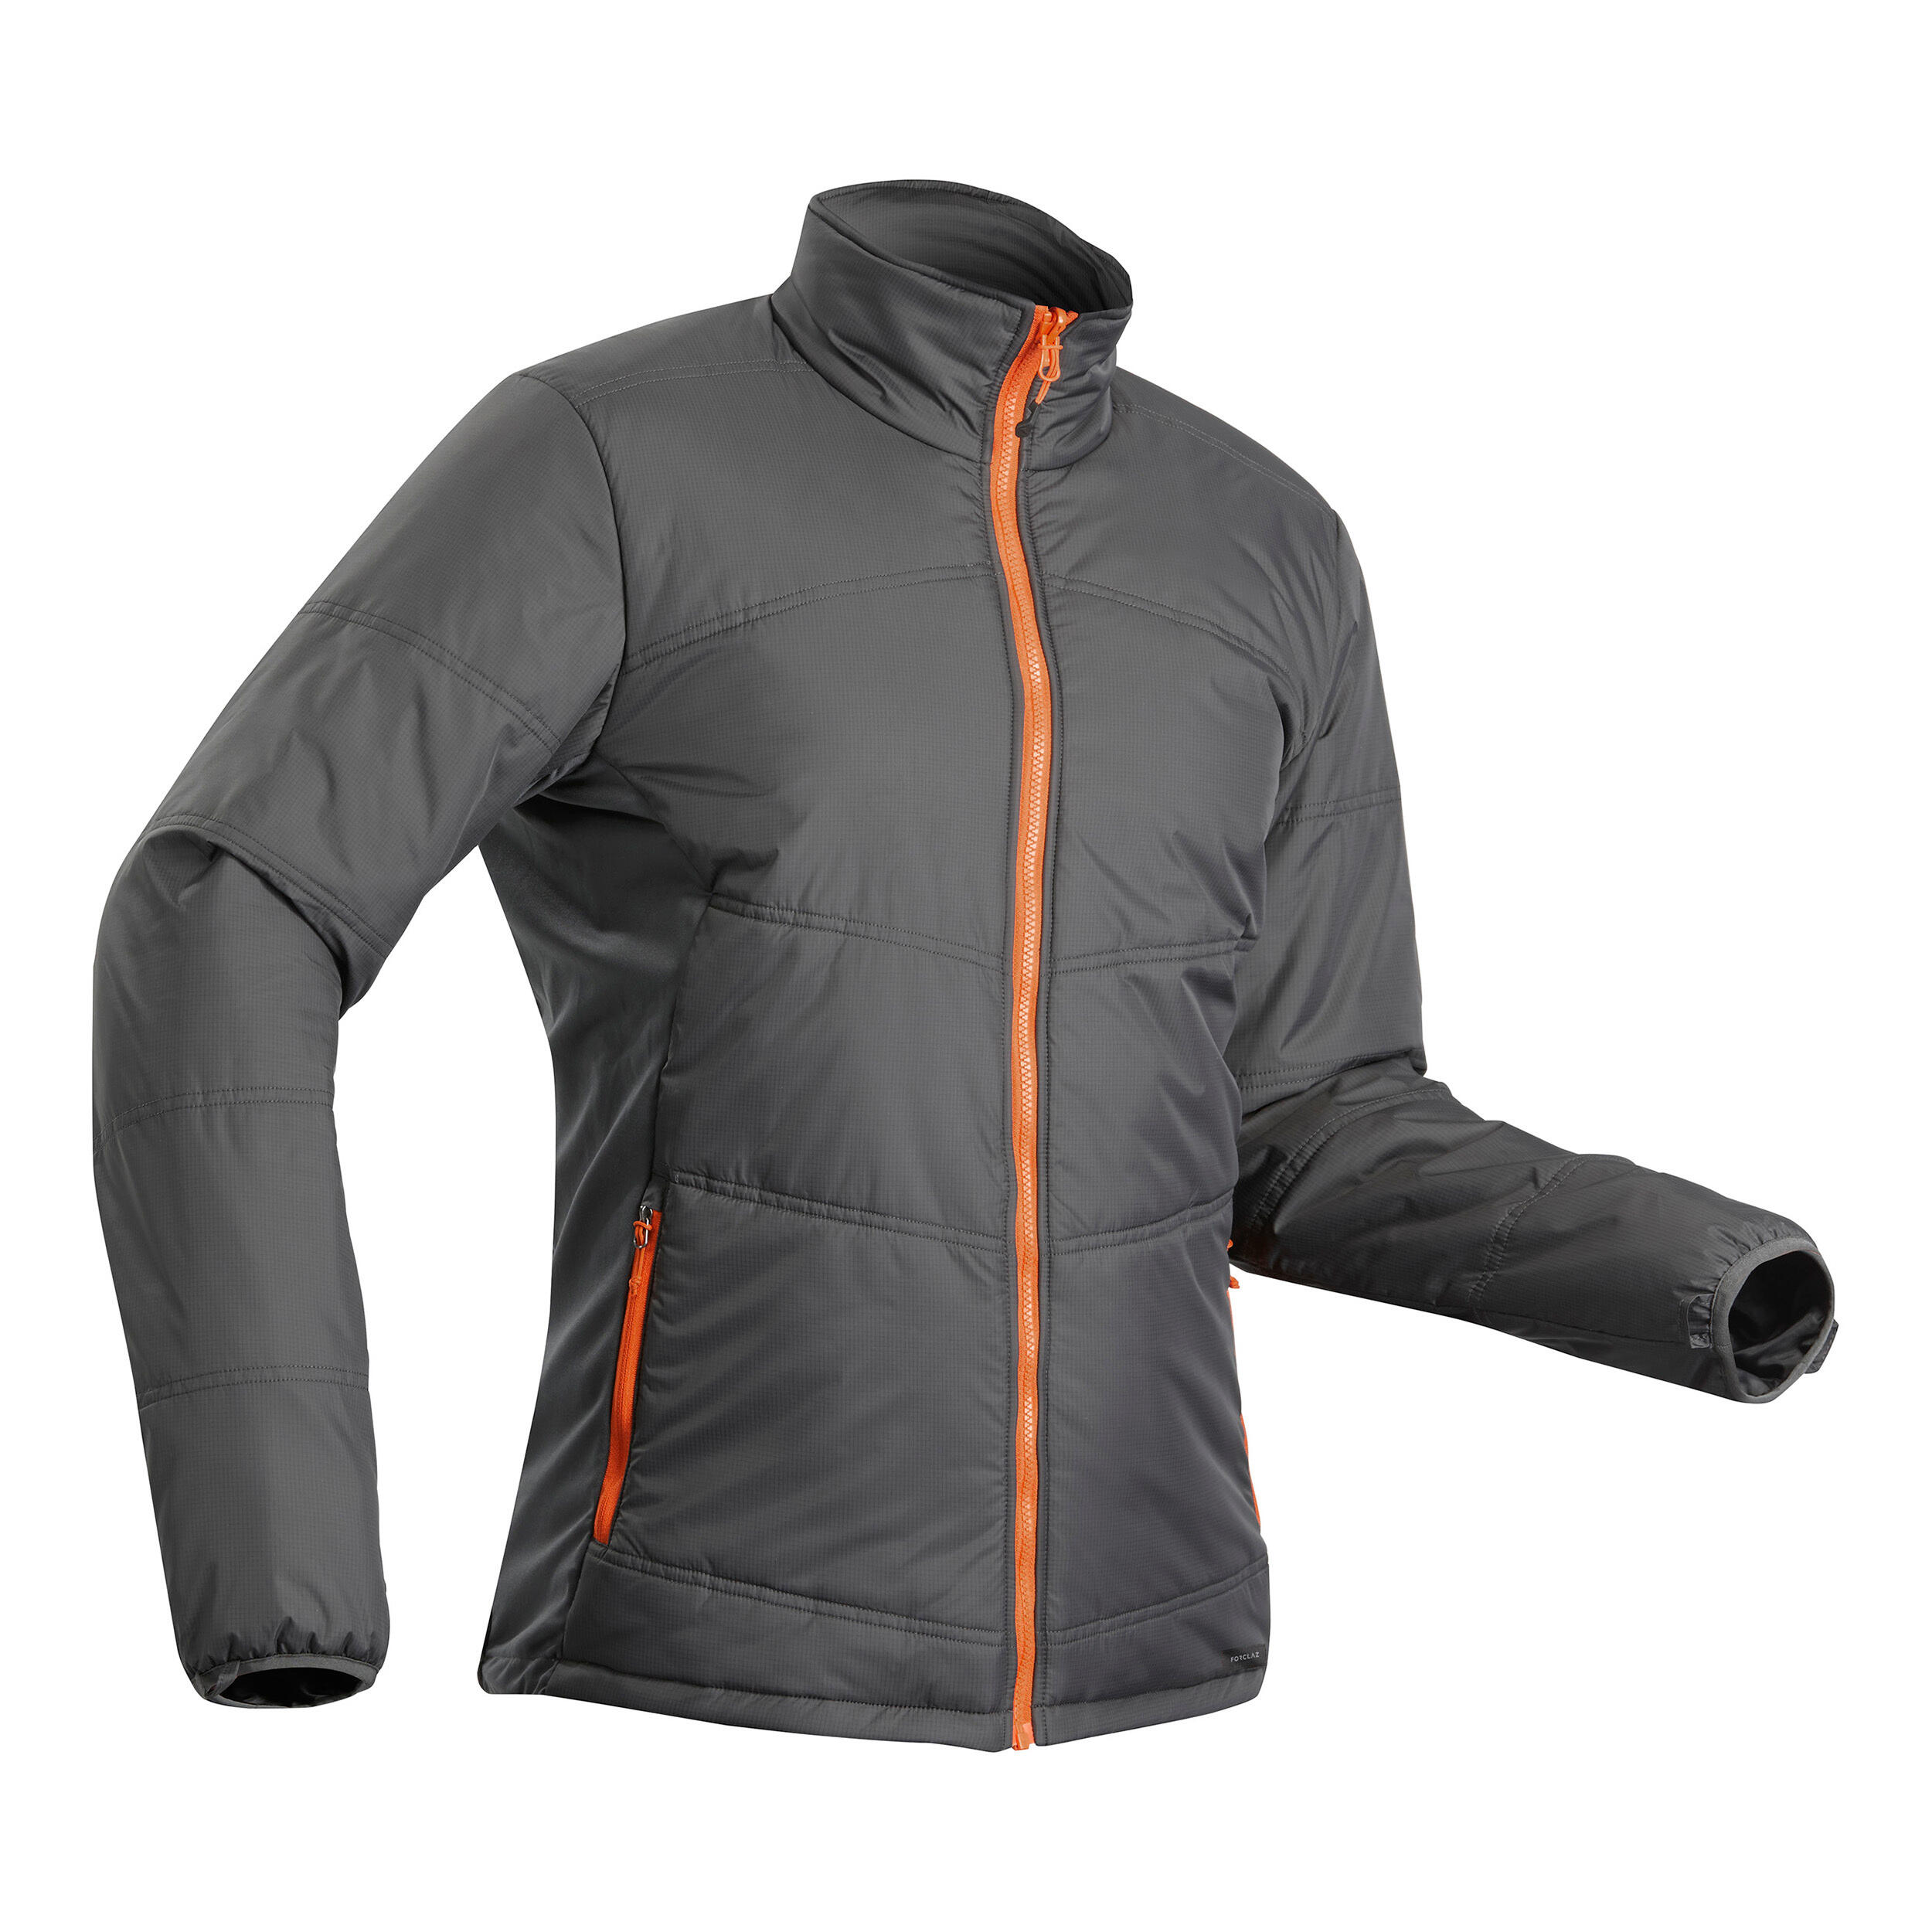 Men's Hiking 3-in-1 Jacket - Travel 500 Black - Carbon grey, [EN] smoked  black - Forclaz - Decathlon